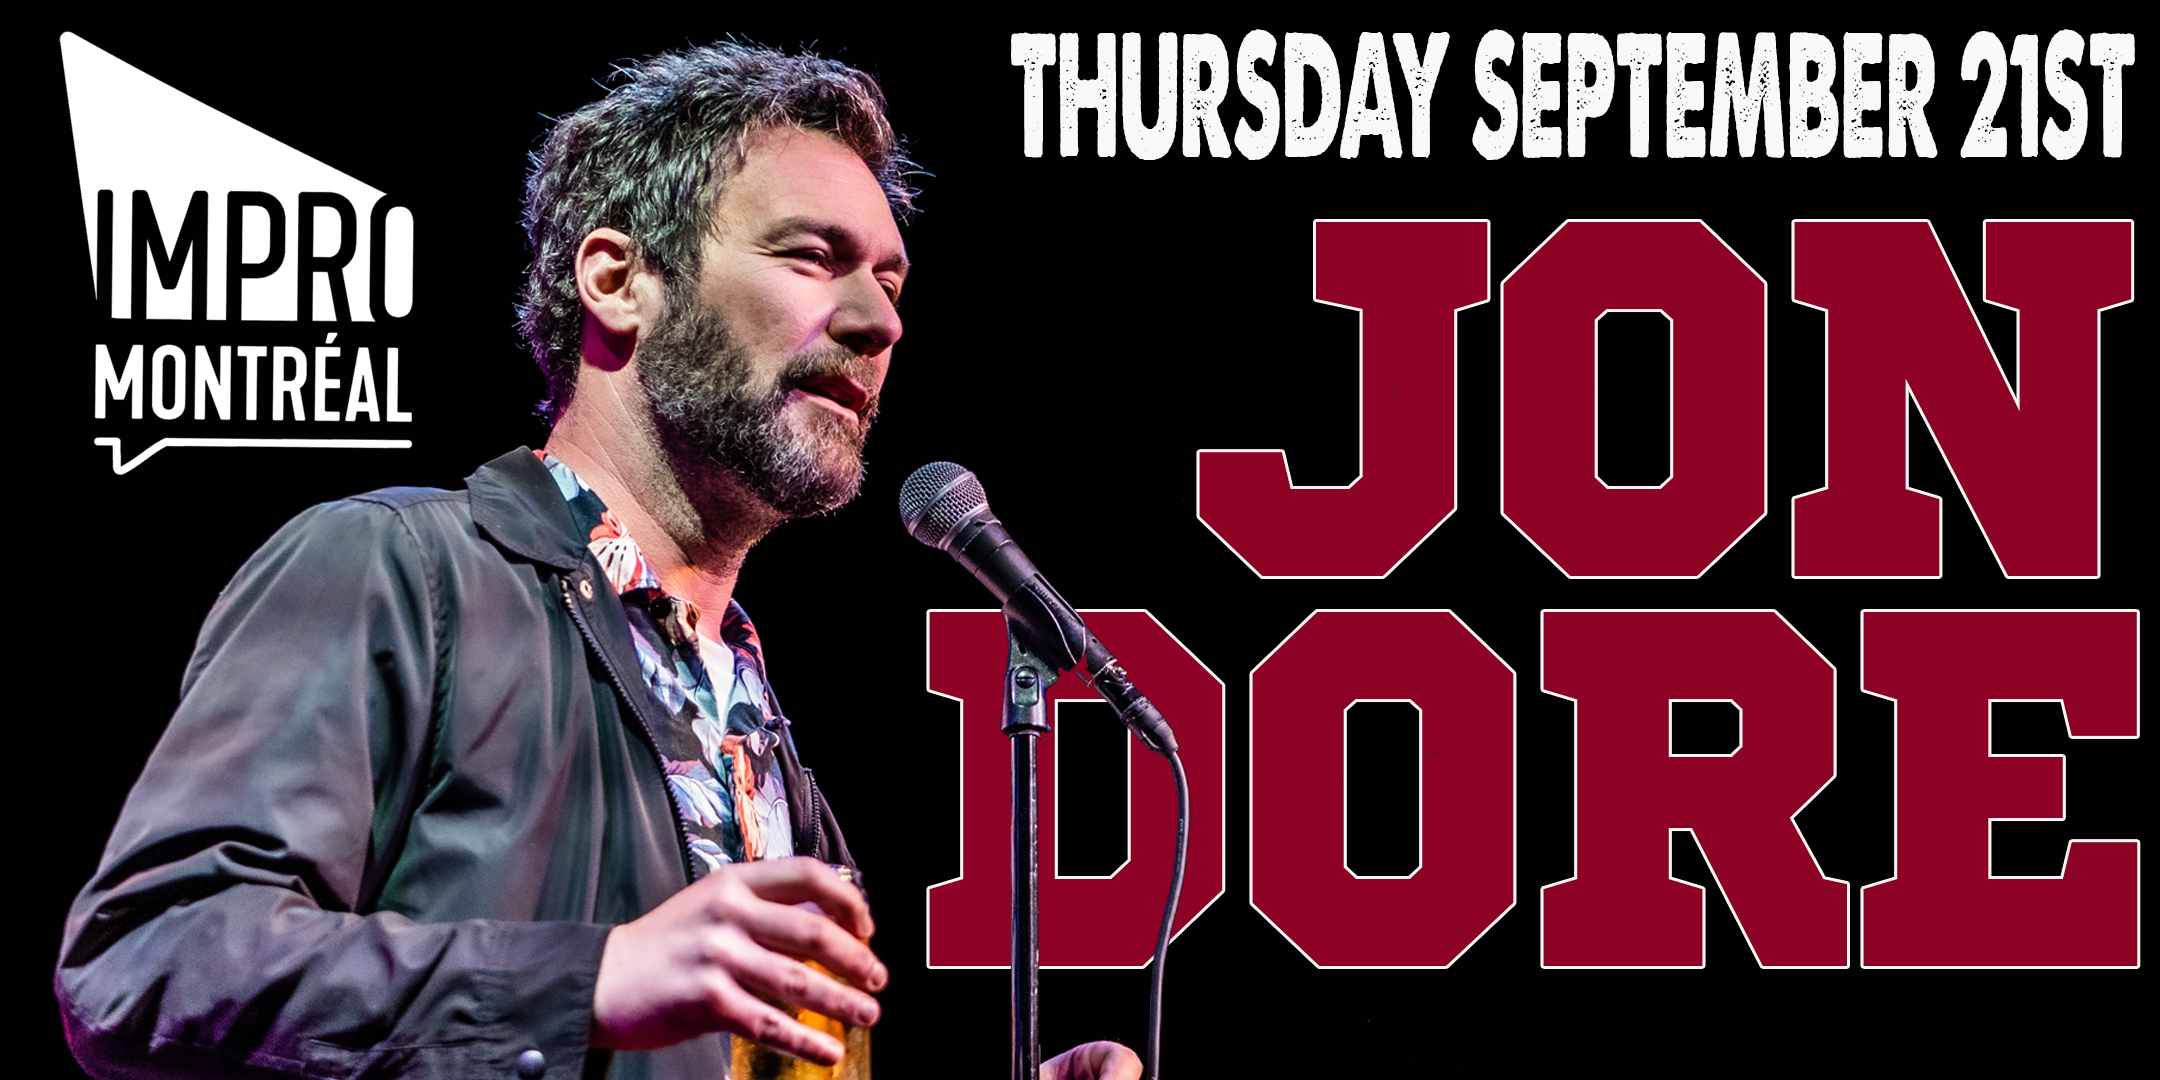 Jon Dore Live in Montreal!